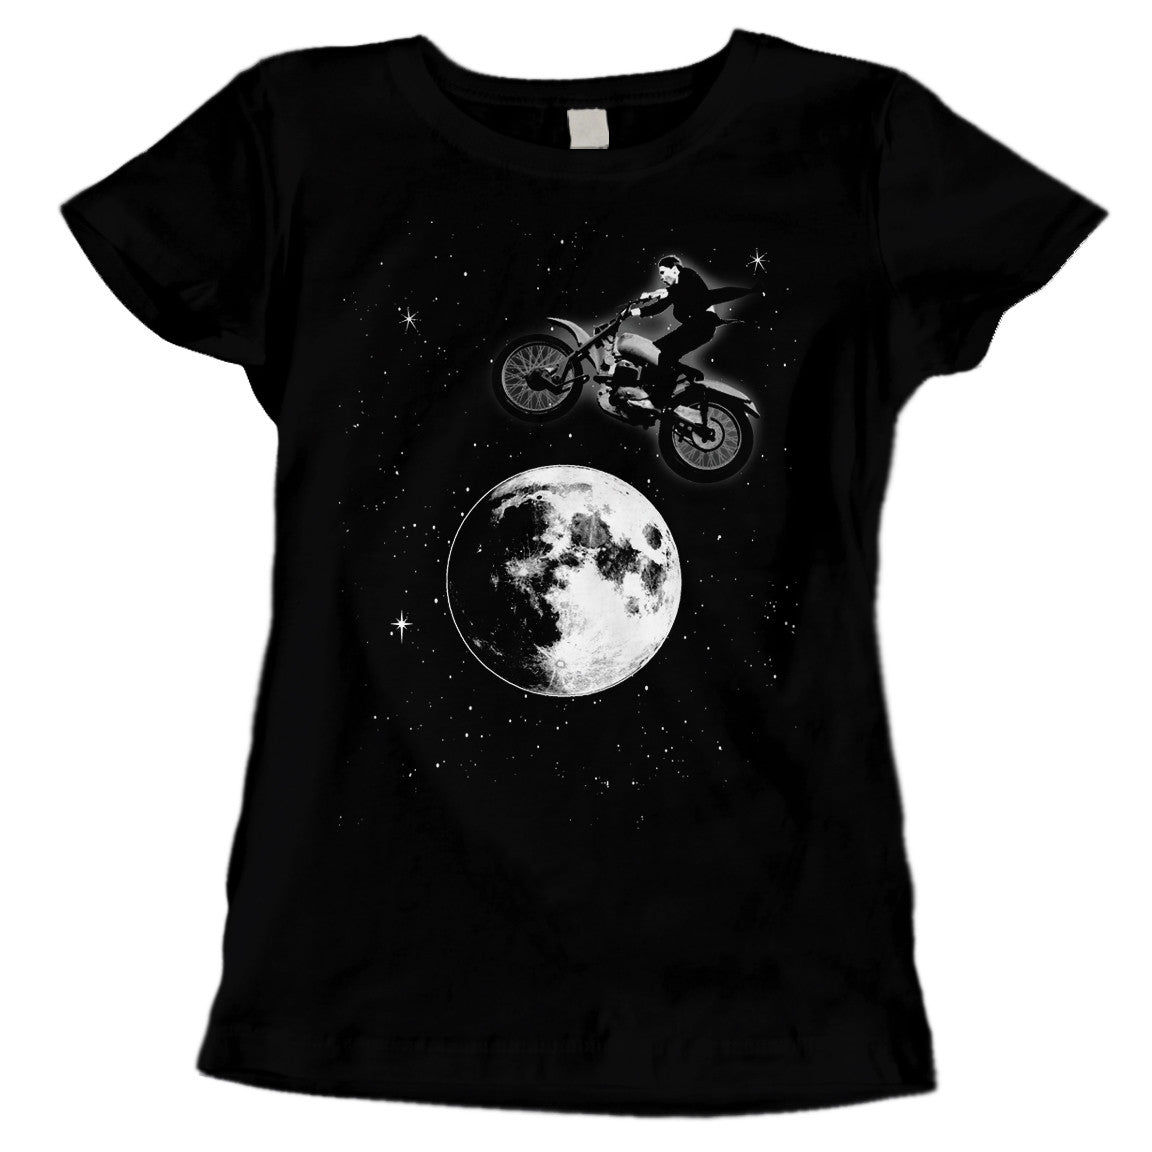 Graphic T-shirt "Moon Jumper"